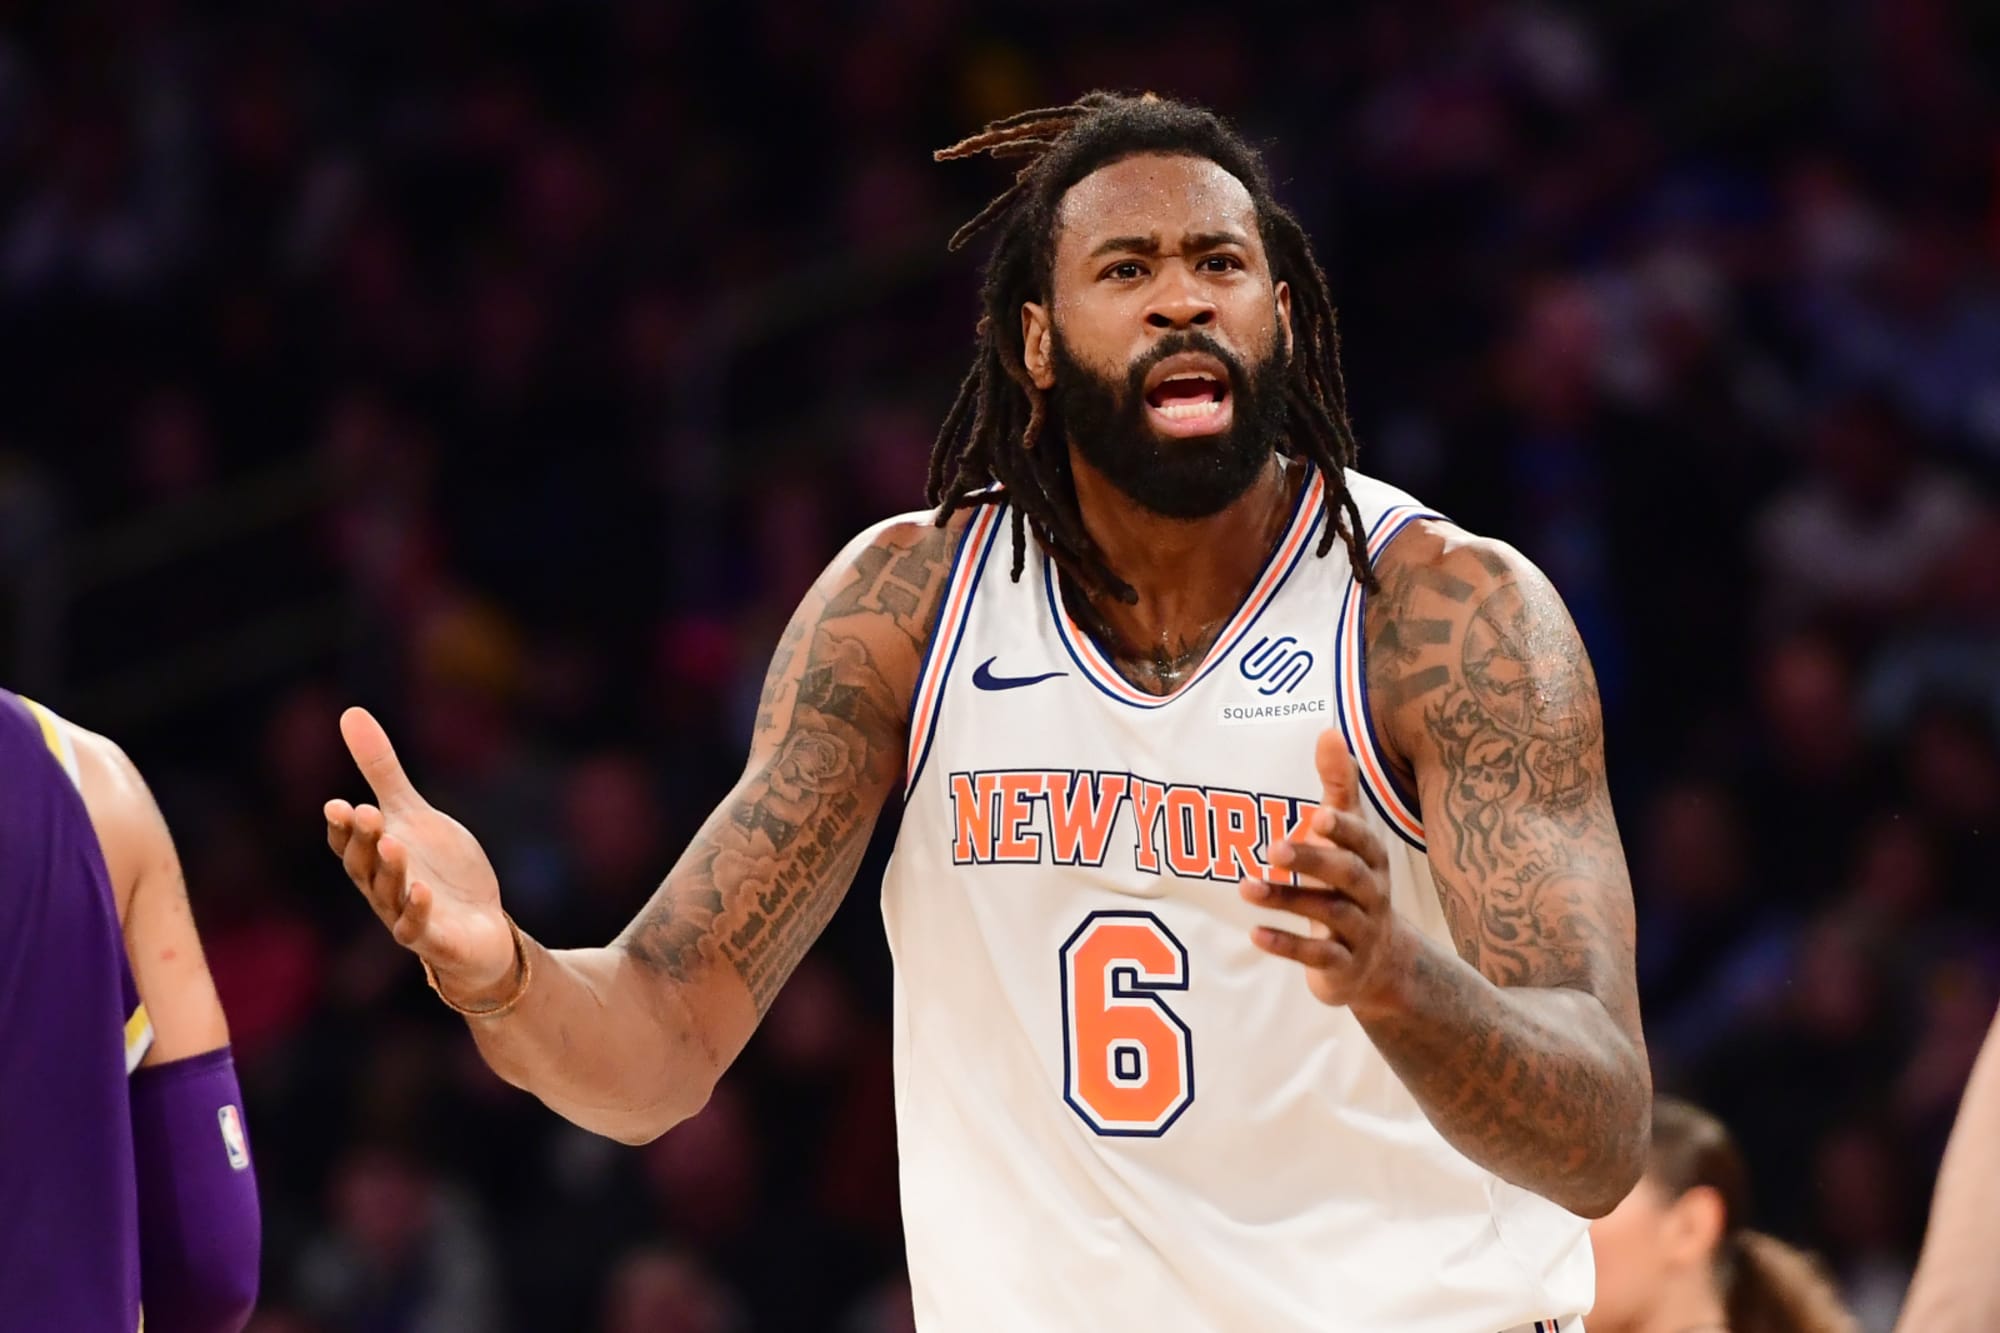 New York Knicks: DeAndre Jordan praises Nets culture in reason for move